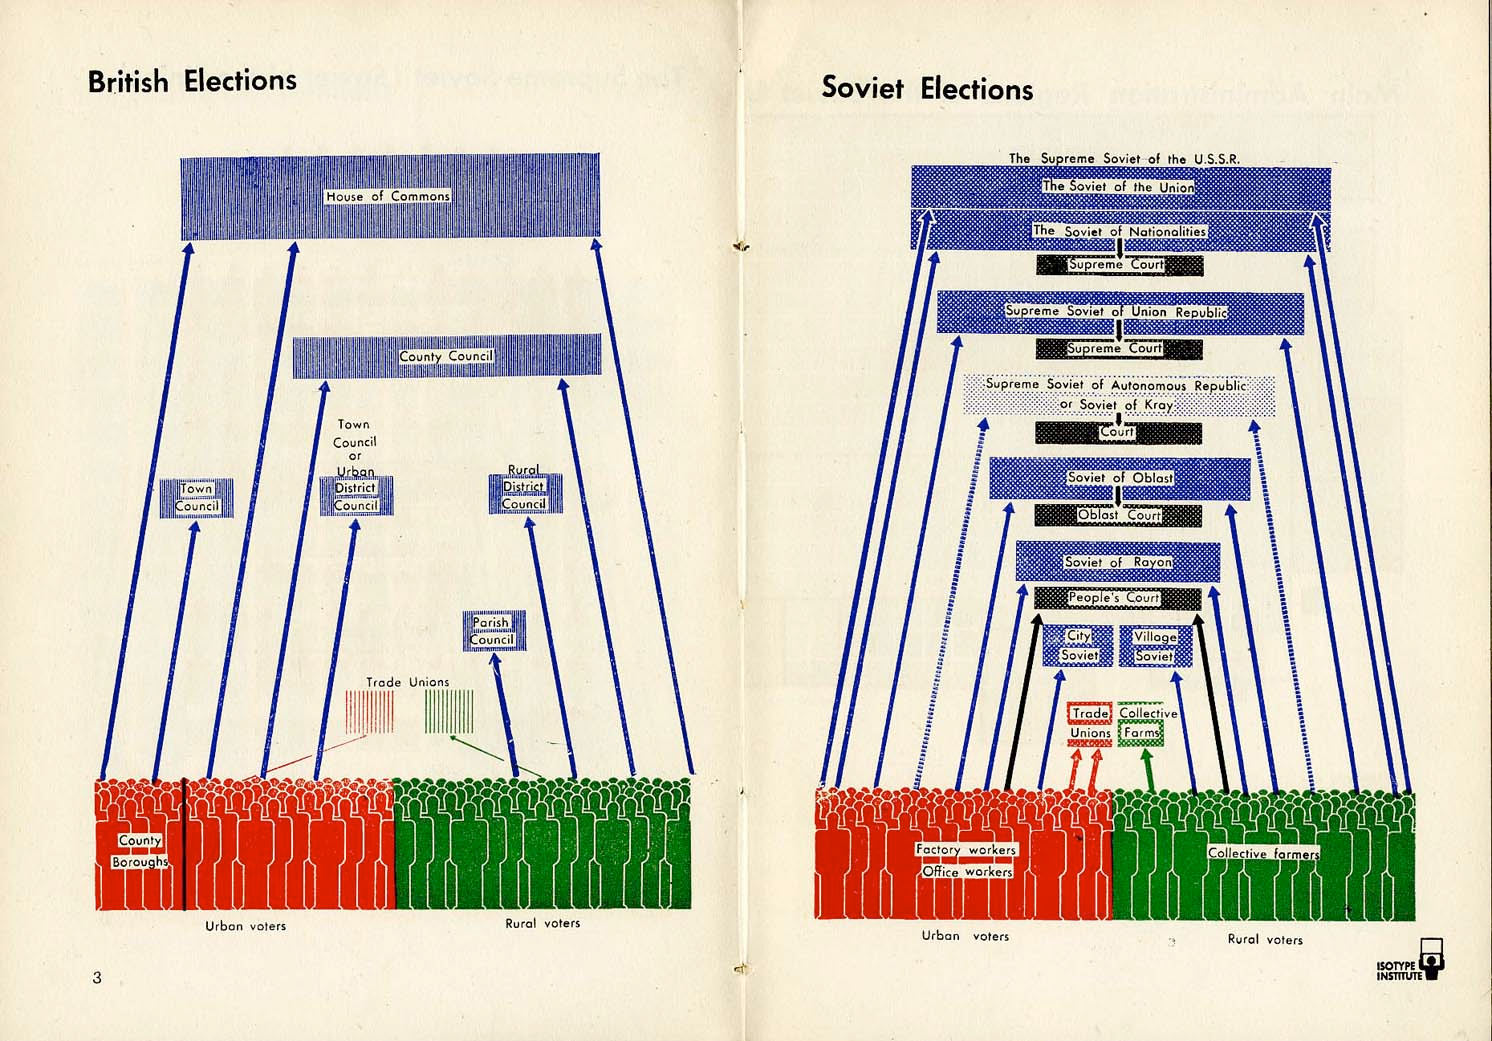 British vs. Soviet electoral system.png